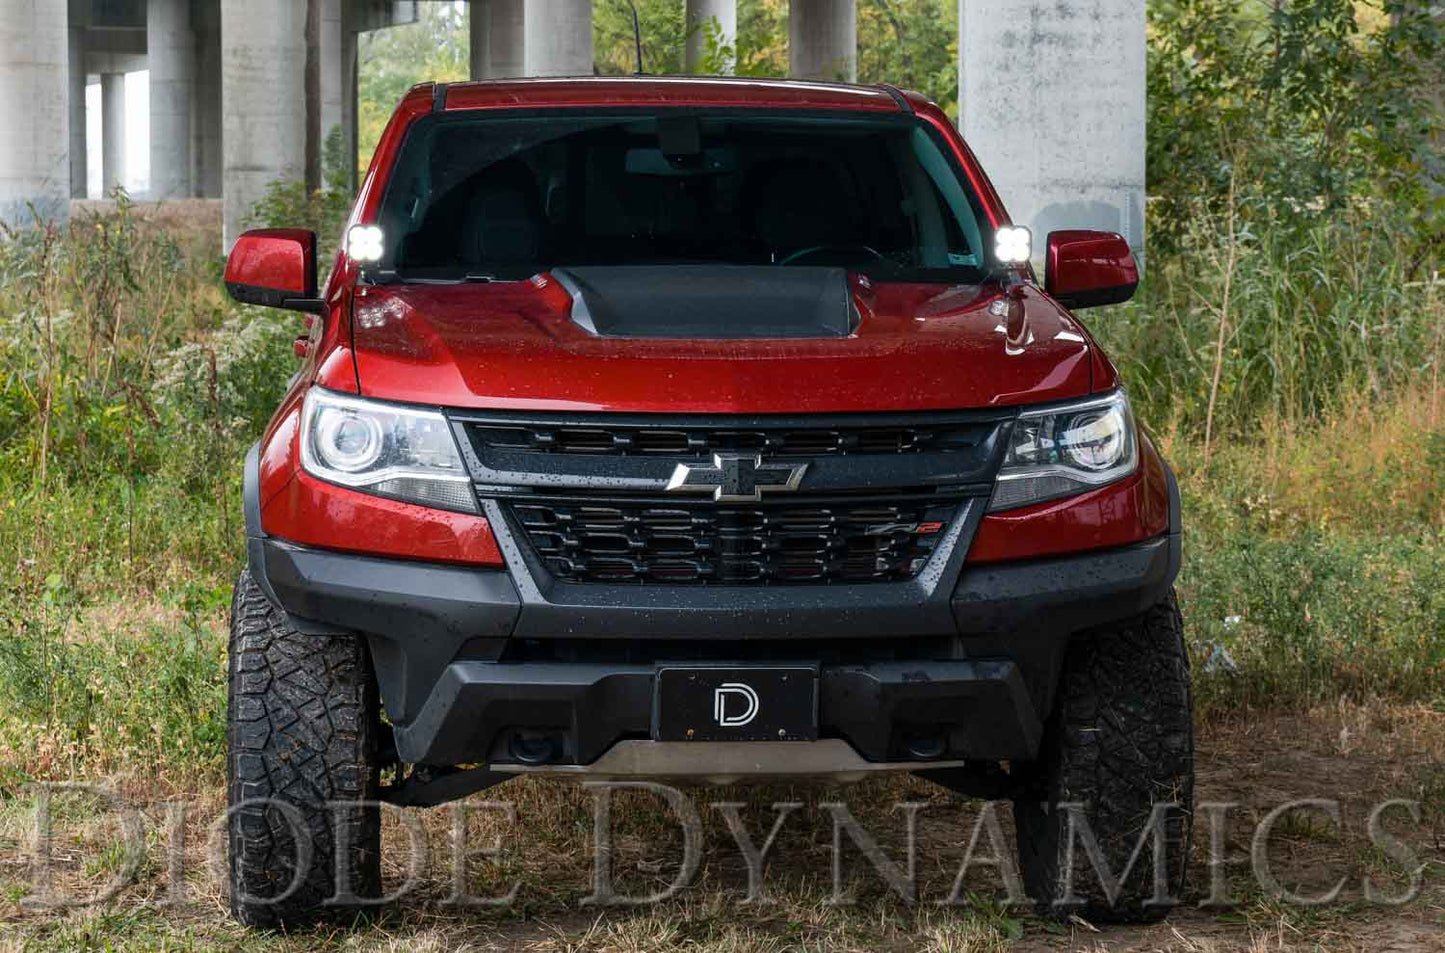 Ditch Light Brackets for 2015-2021 Chevrolet Colorado Diode Dynamics